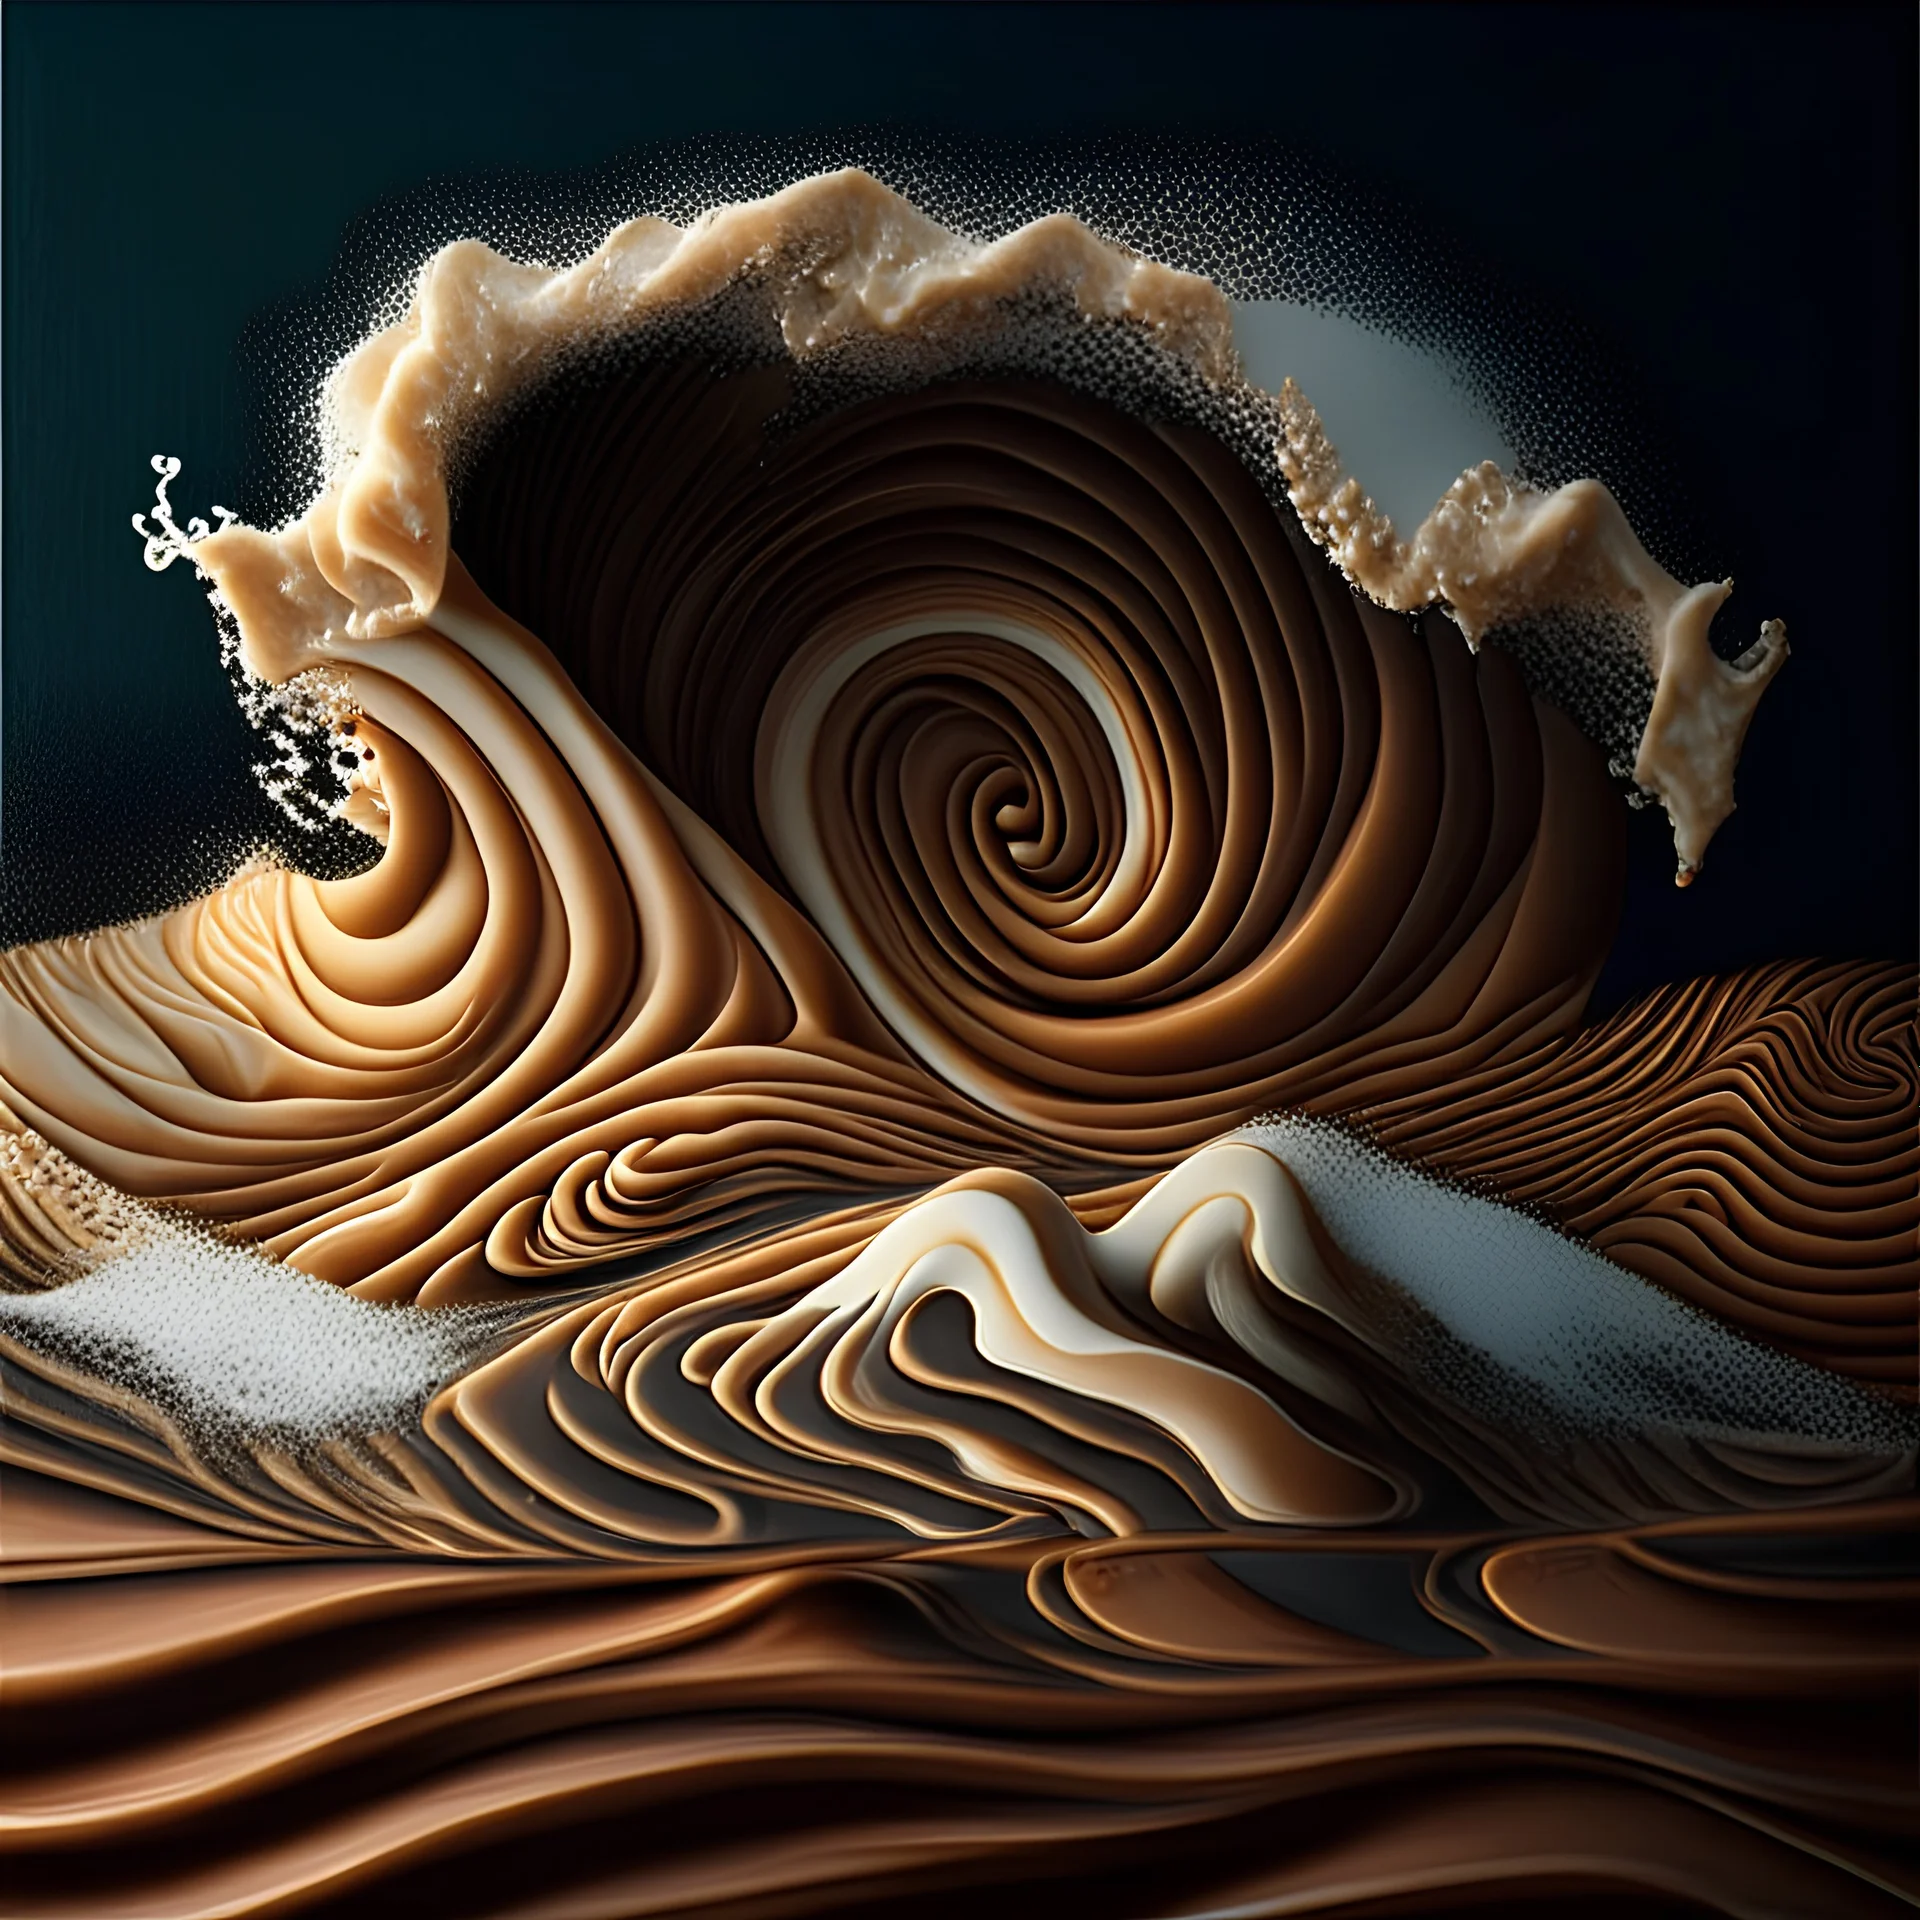 Waves of coffee